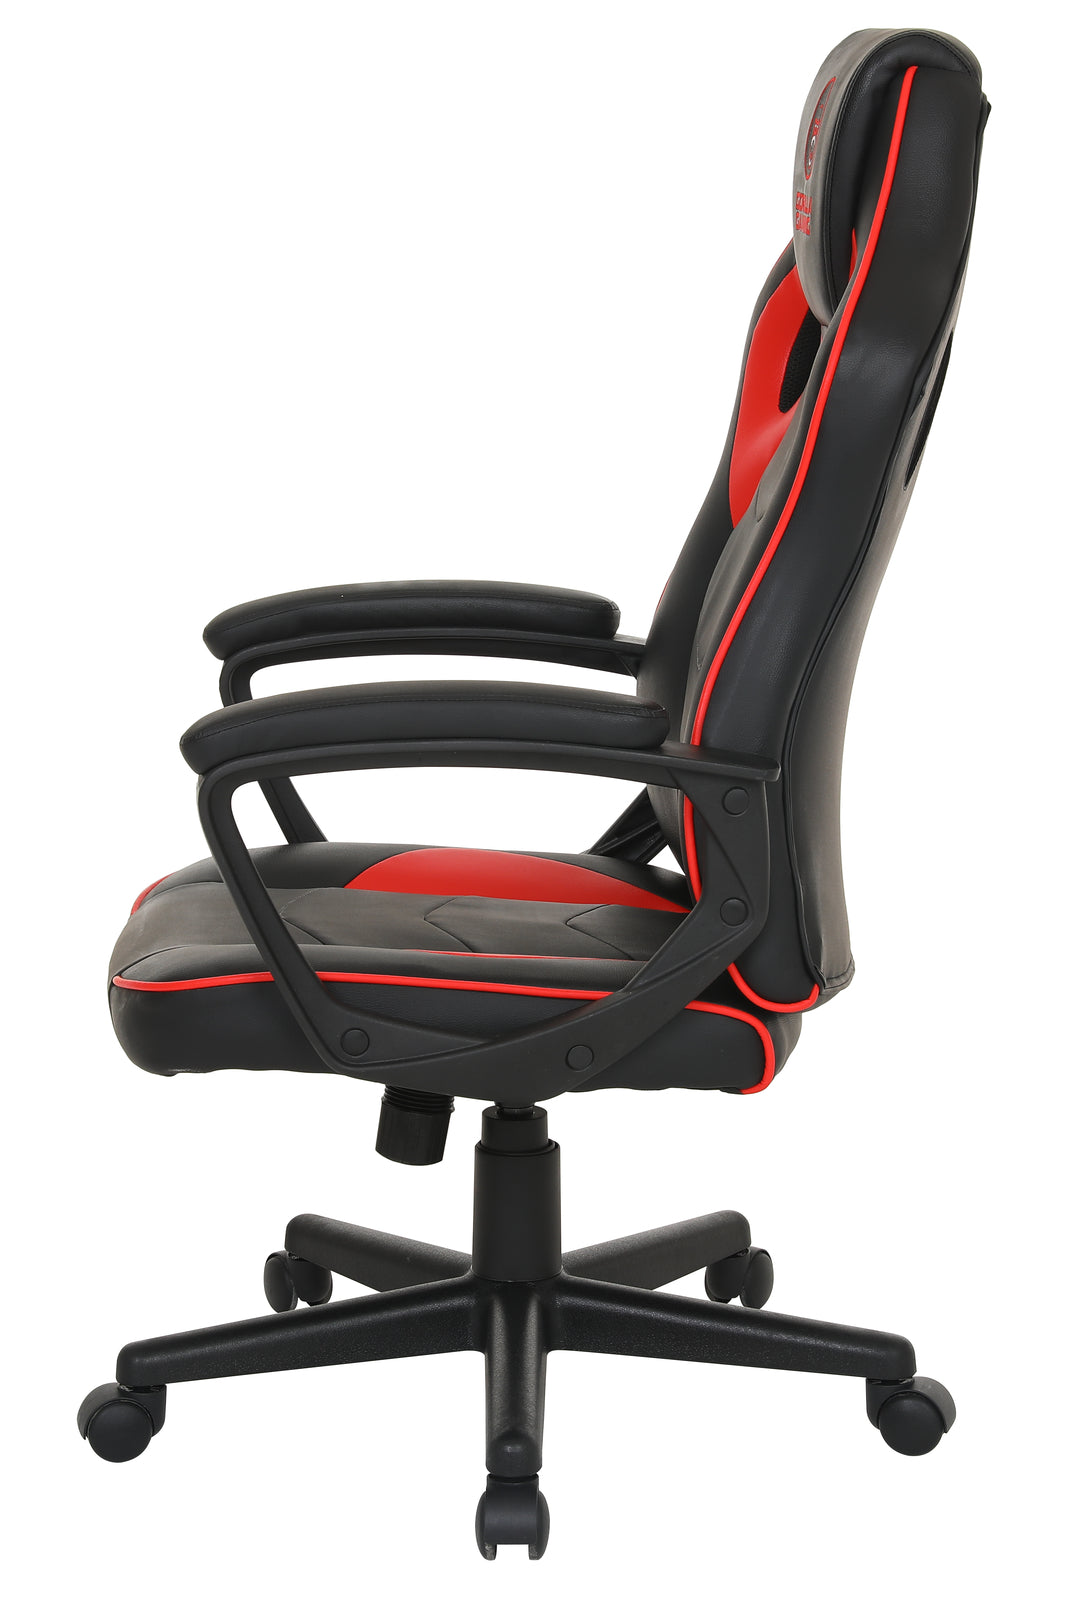 Gorilla Gaming Chair - Black/Red - Xbox Series X